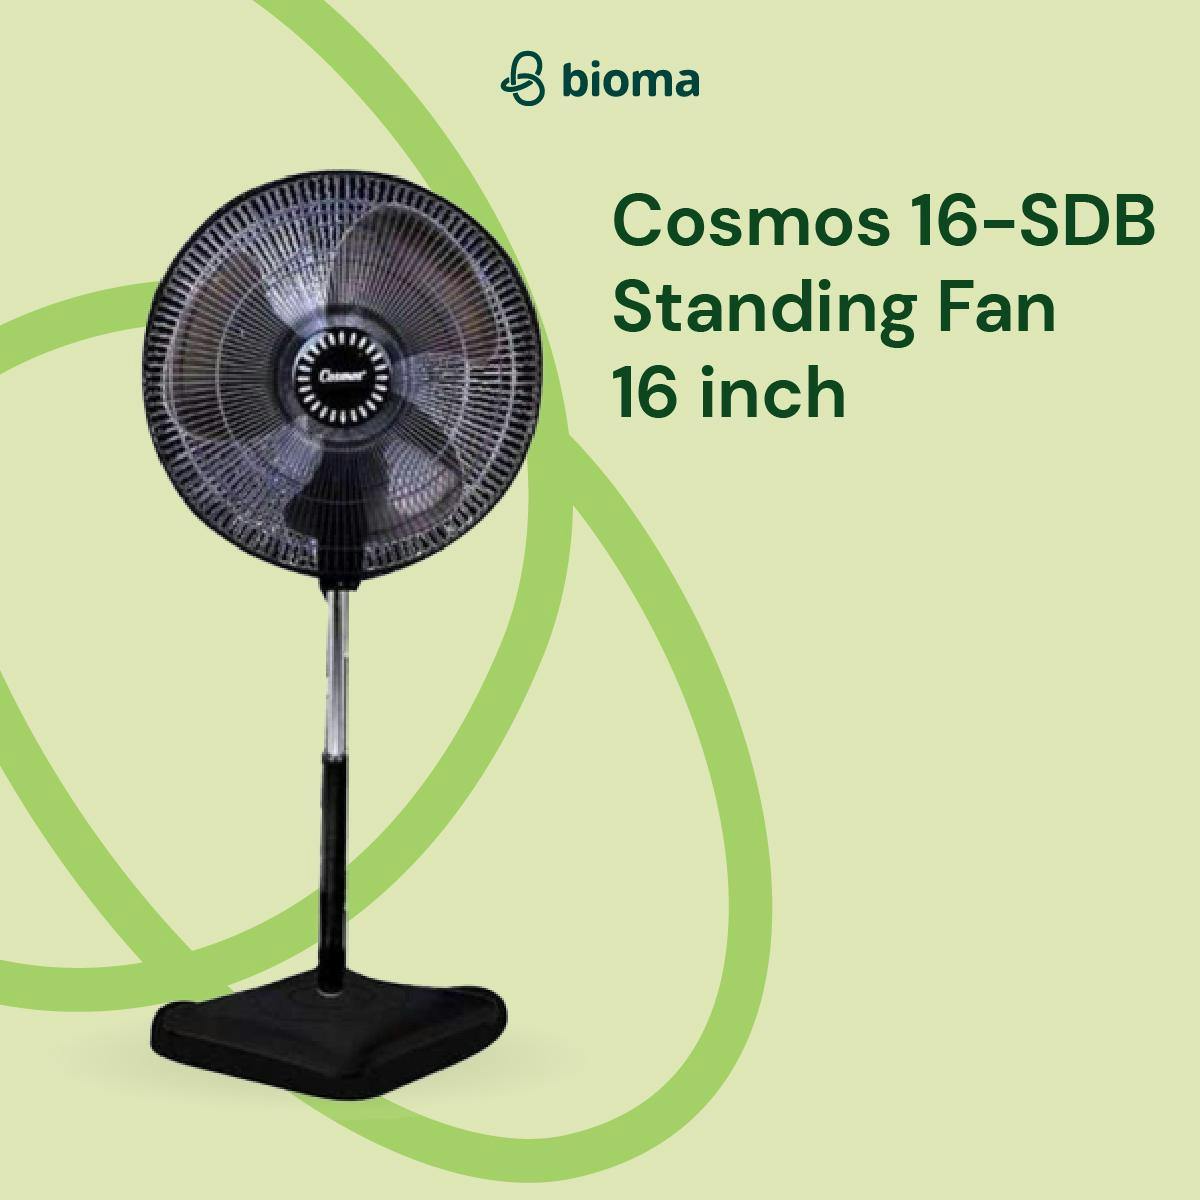 Cosmos 16-SDB Standing Fan 16 inch